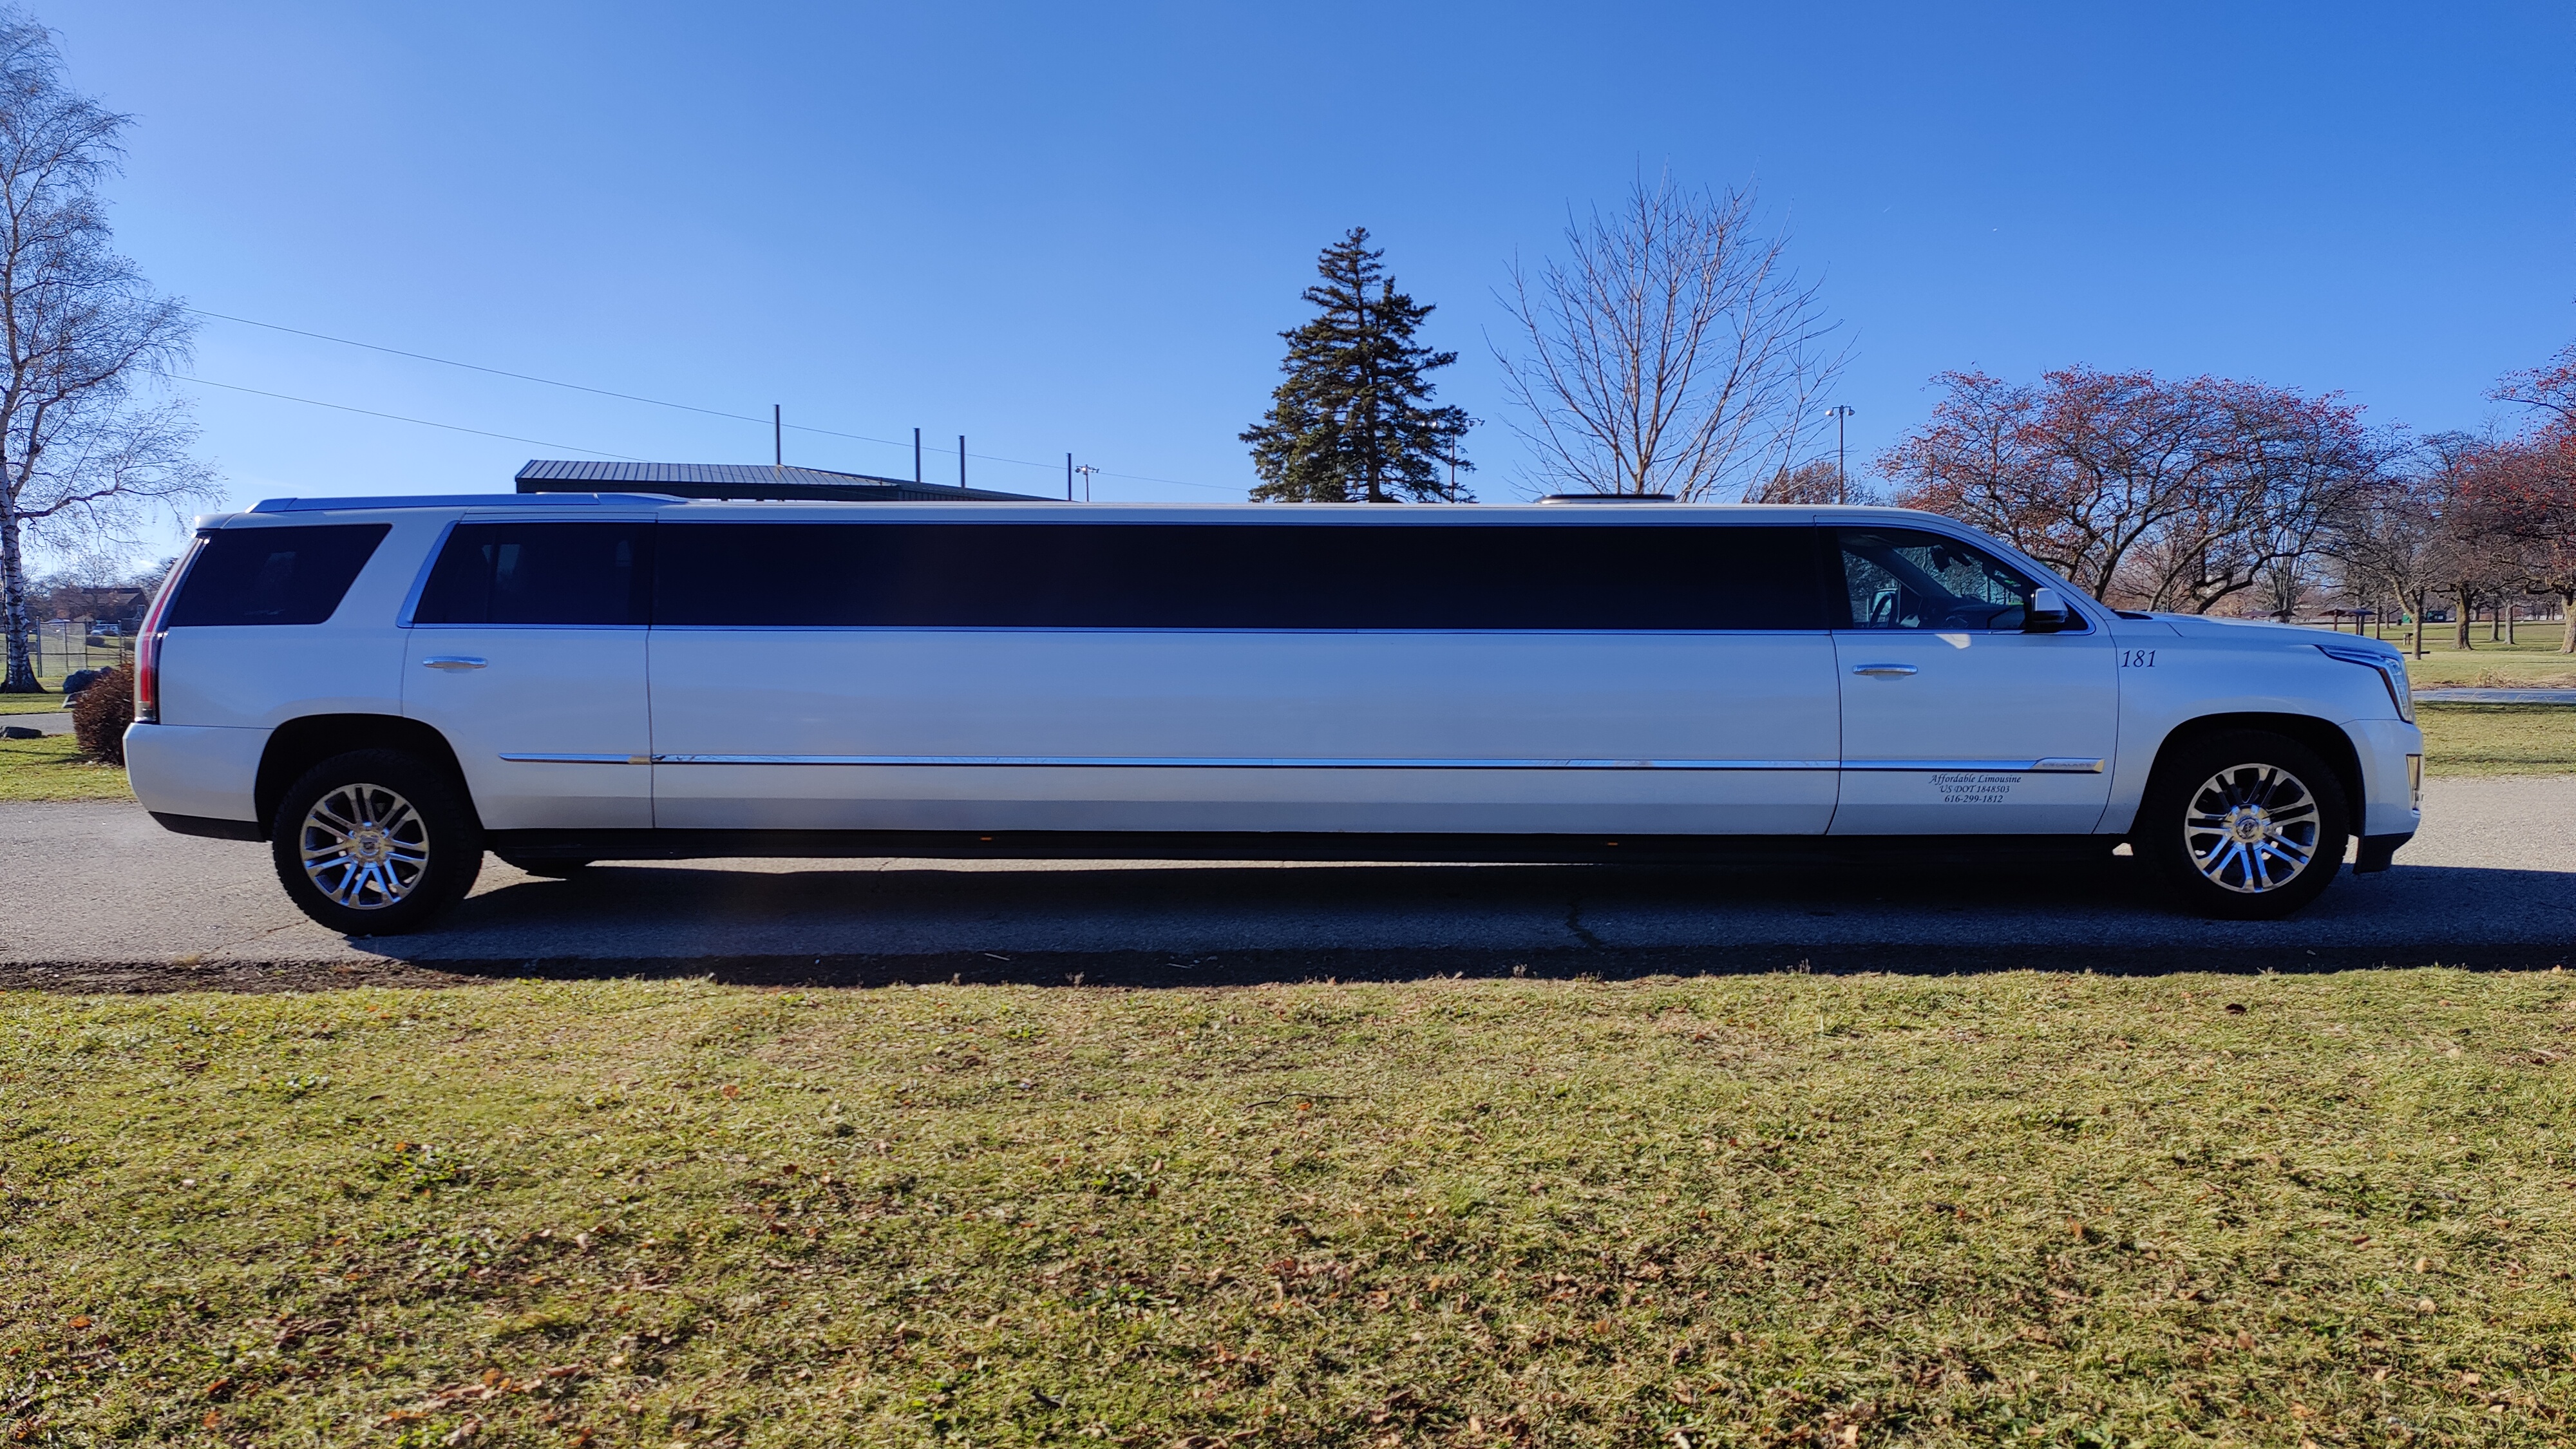 18 Passenger Cadillac Escalade Passenger's Side